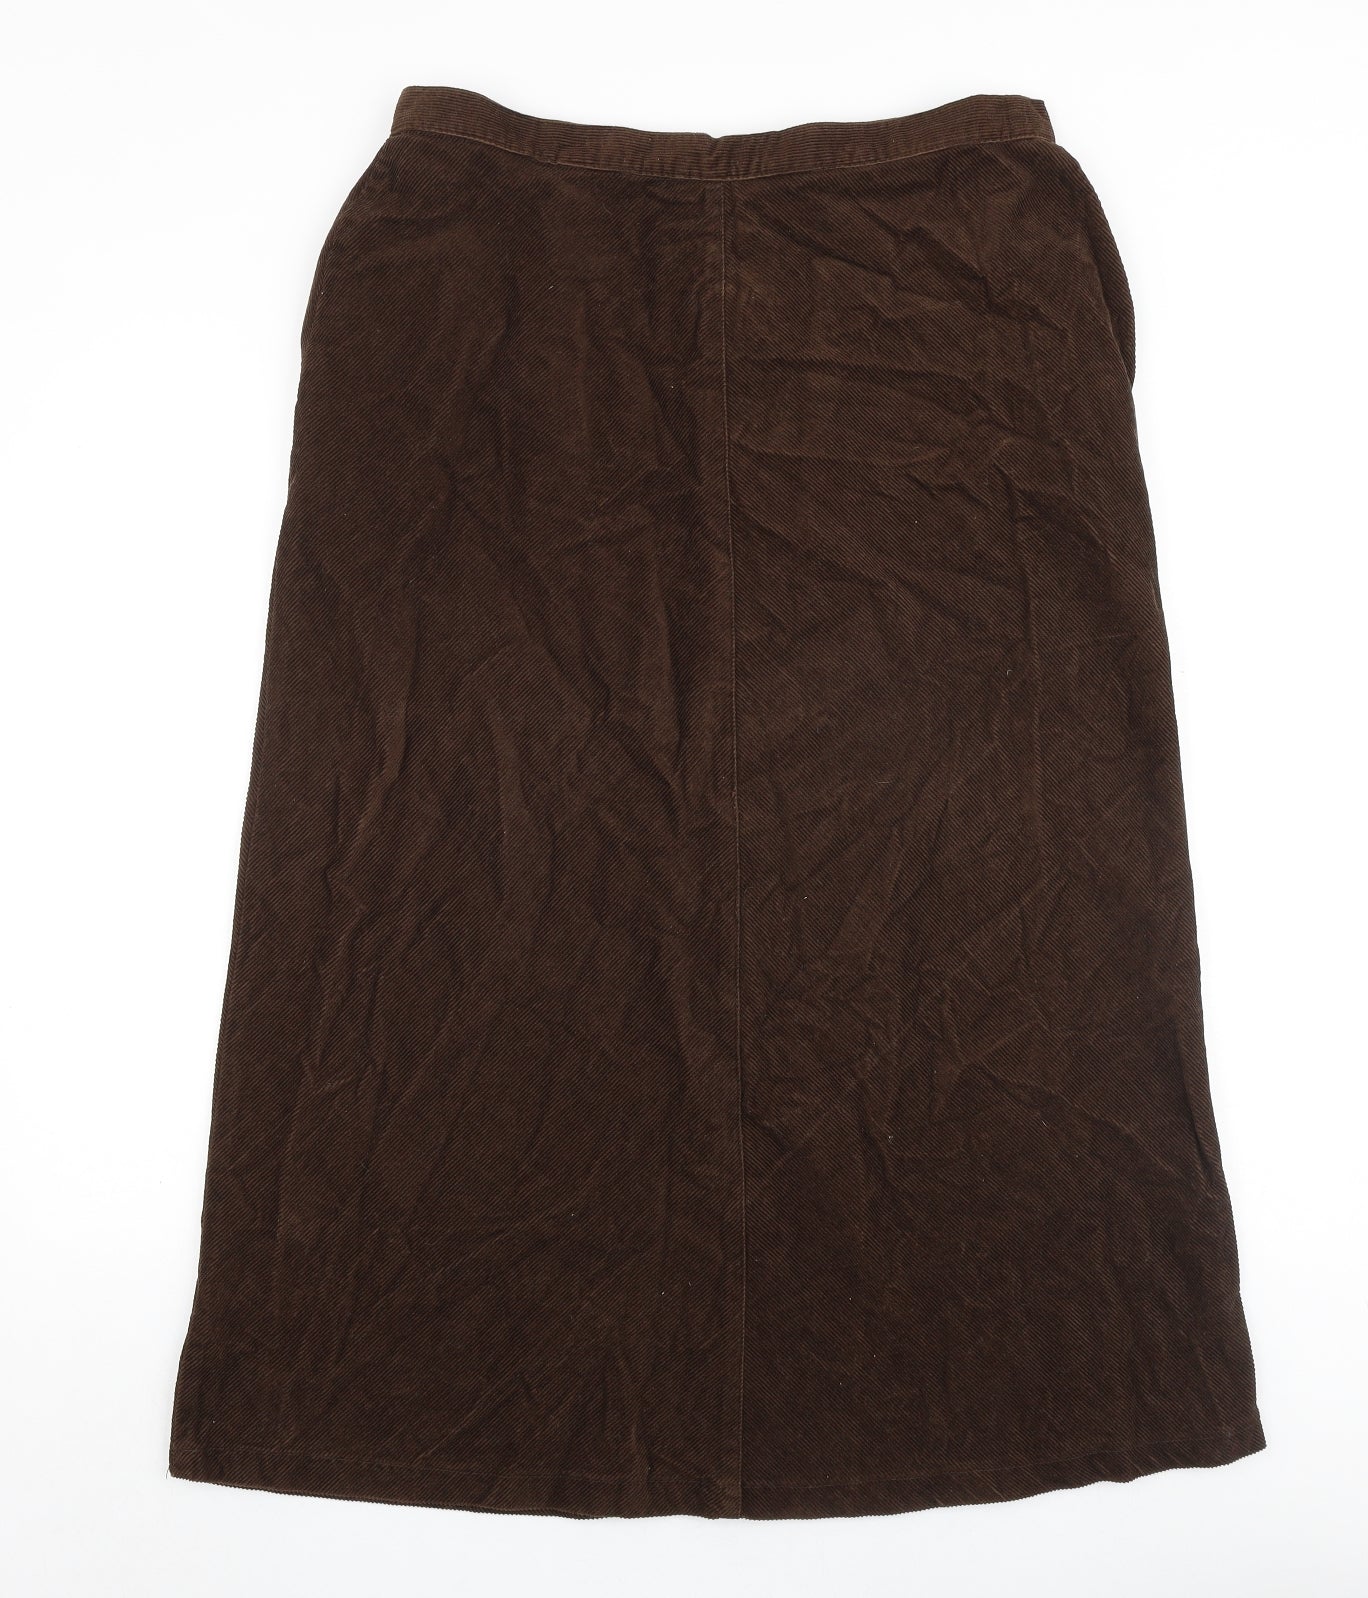 Bonmarché Womens Brown Cotton A-Line Skirt Size 16 Zip